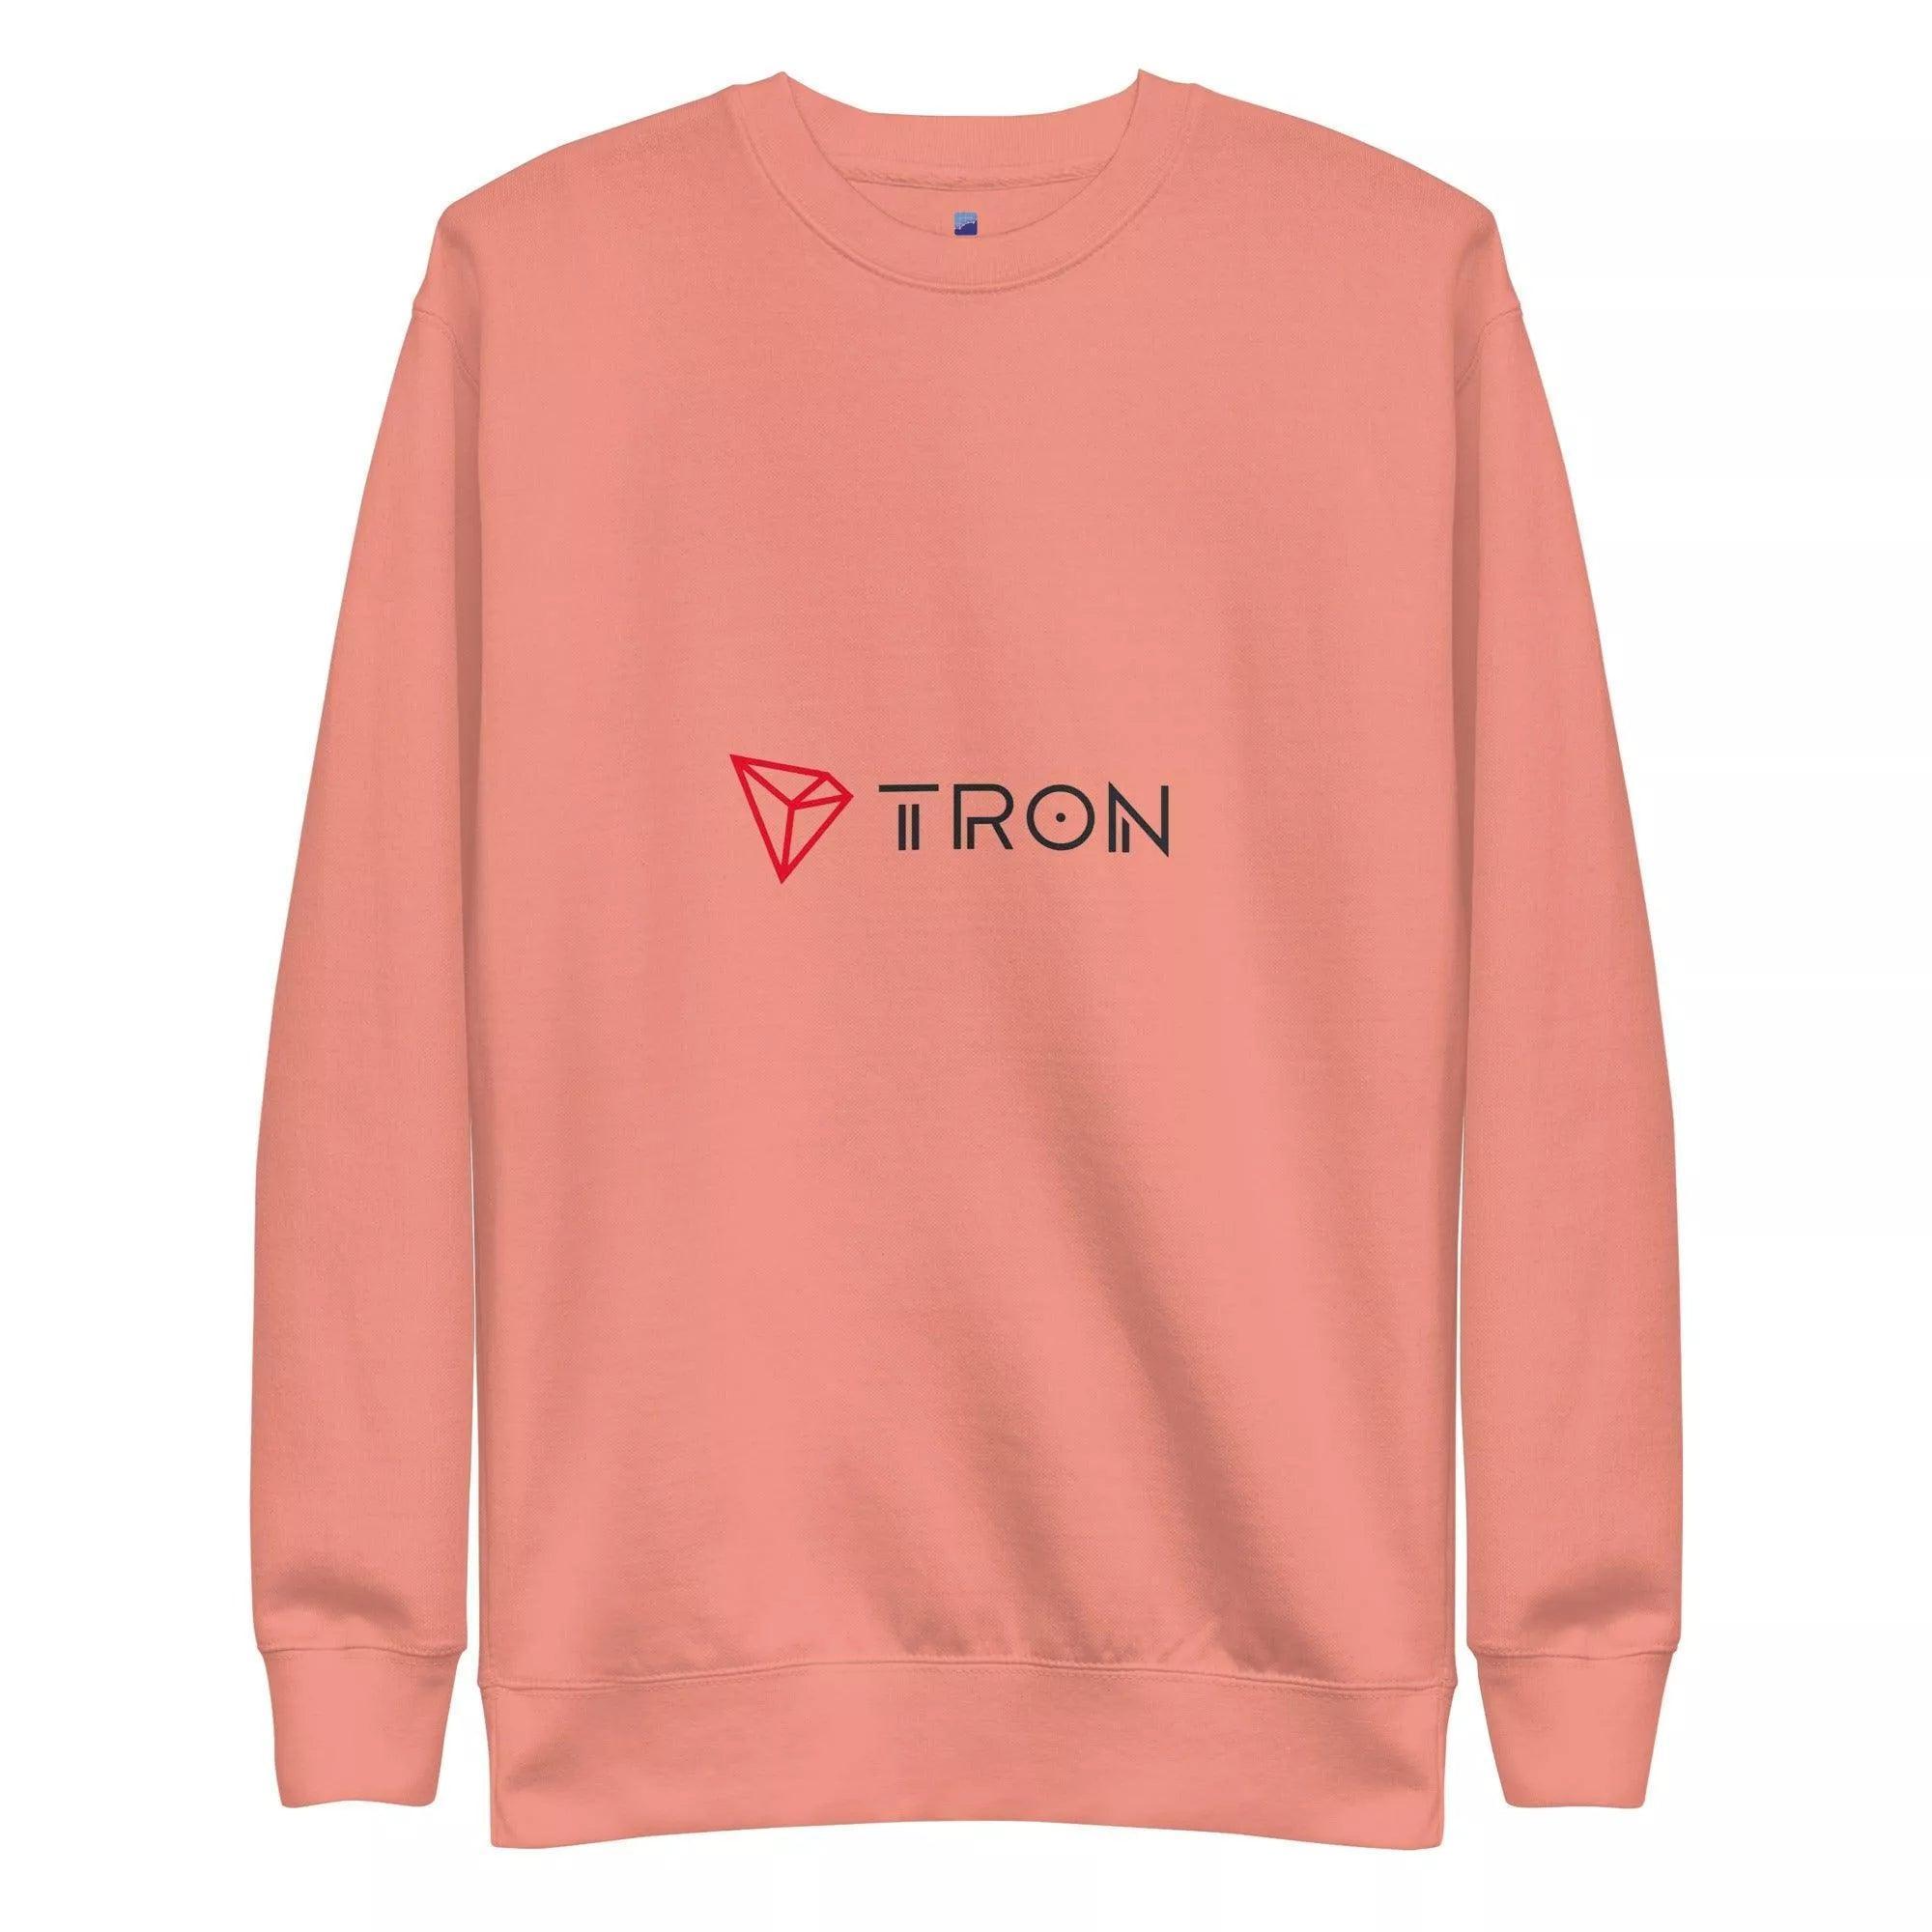 Tron Sweatshirt - InvestmenTees